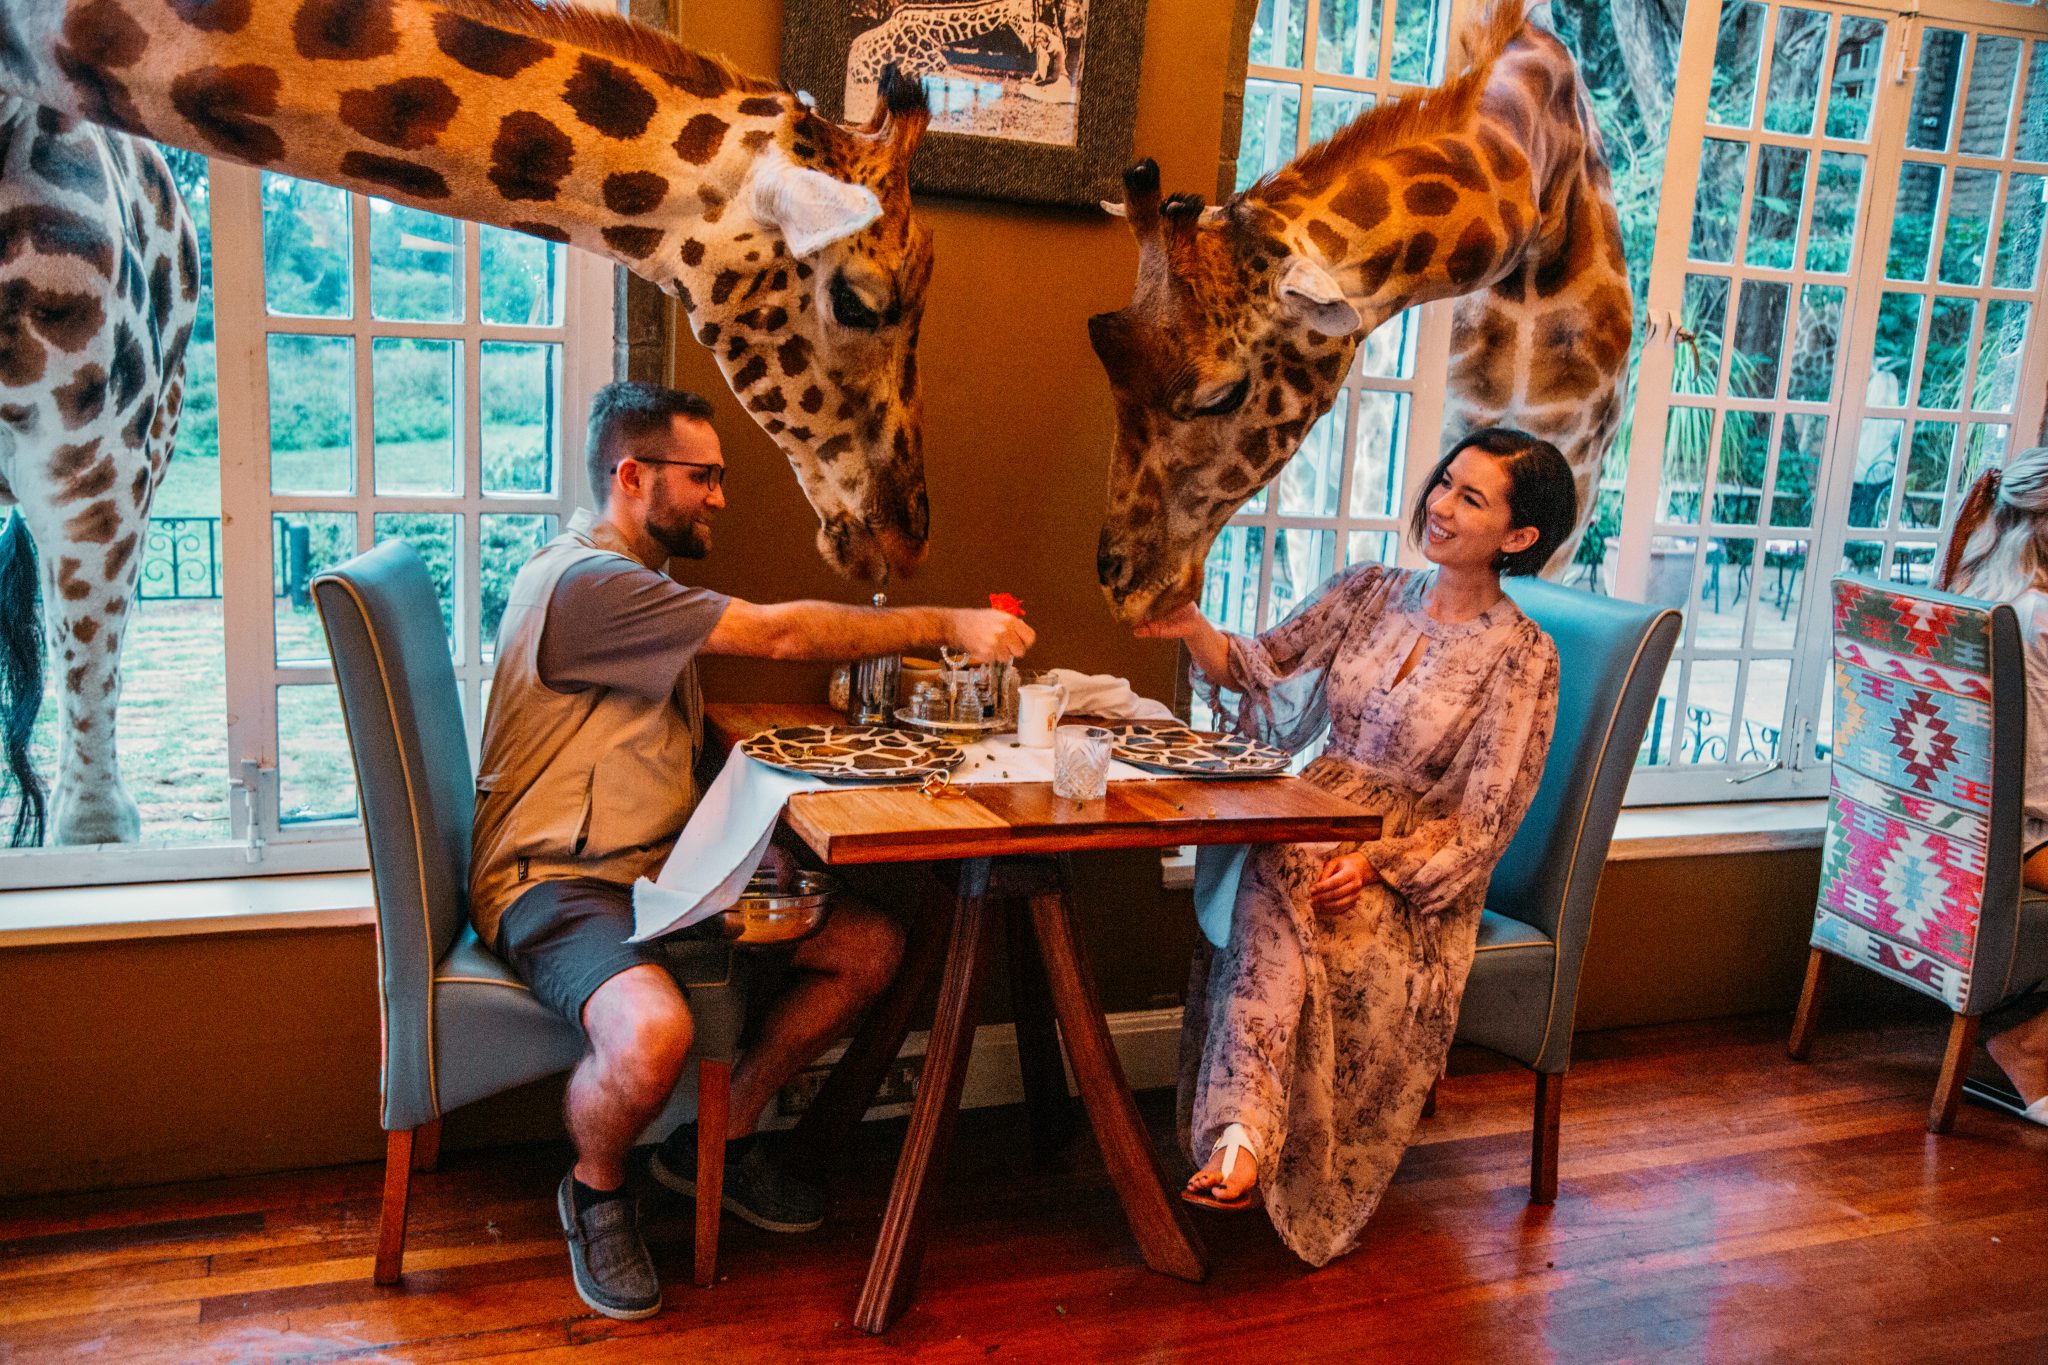 The famous giraffe manor breakfast where the giraffes stick their heads through the windows